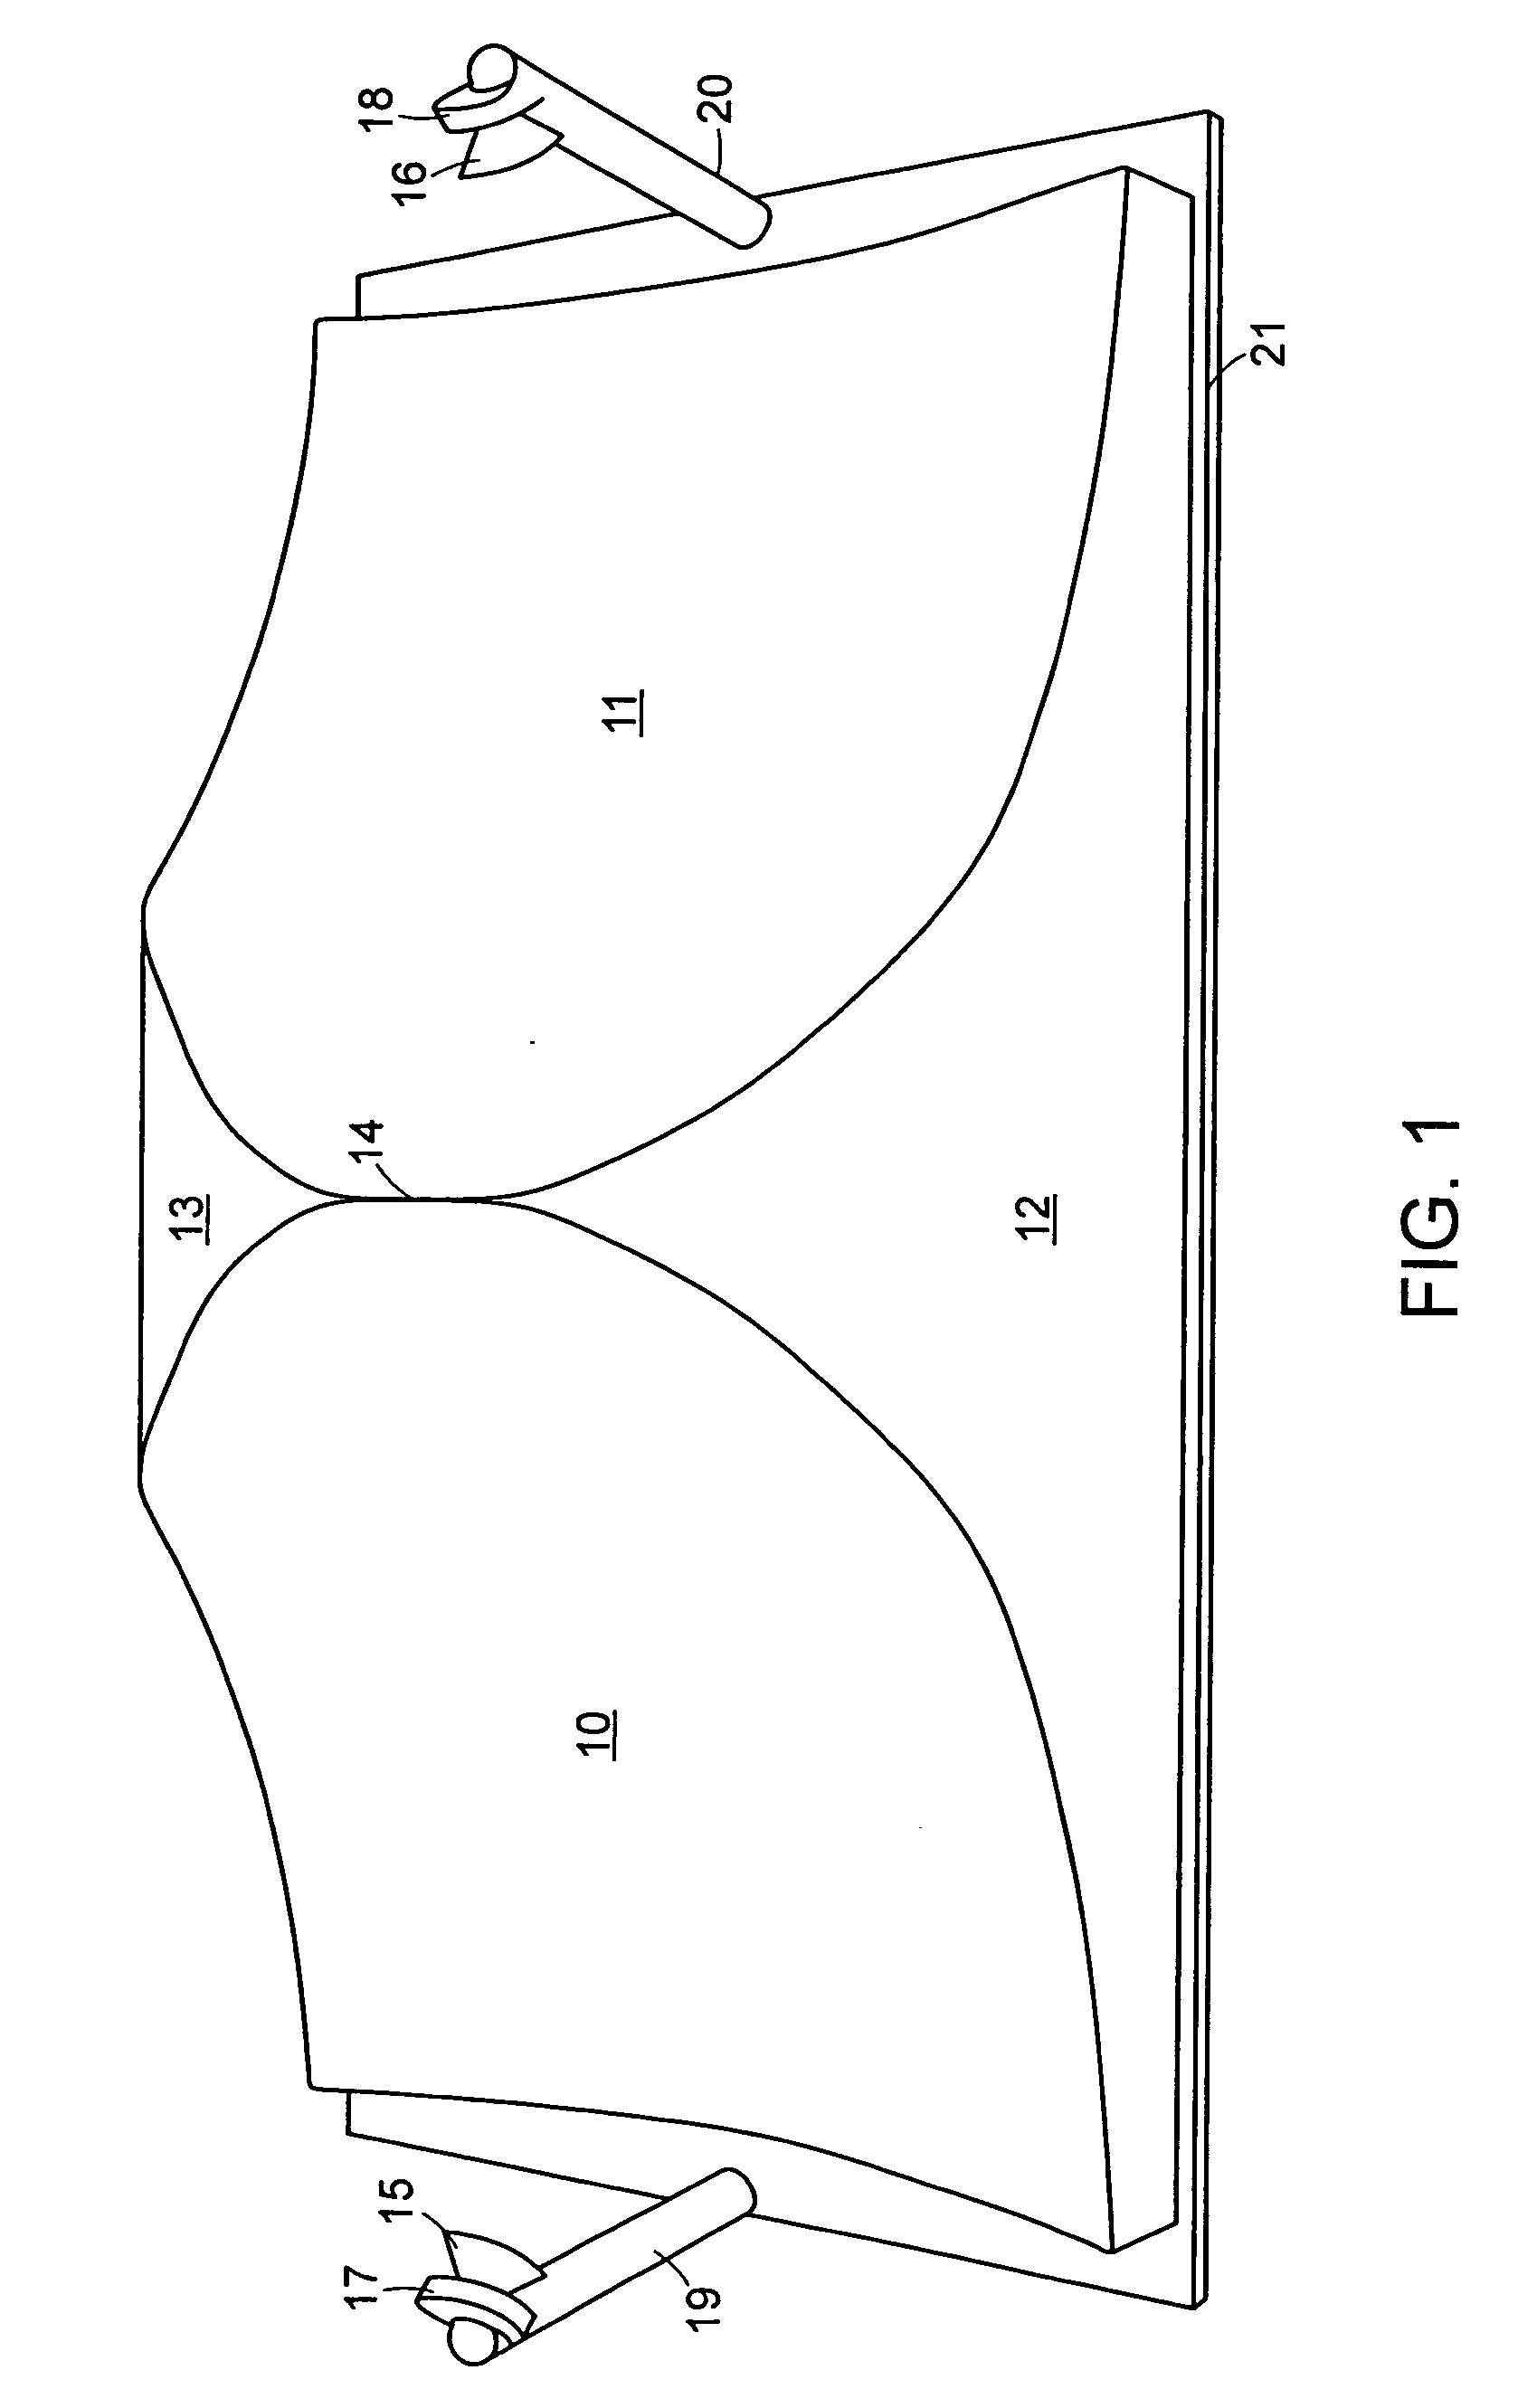 Aligned duplex antennae with high isolation